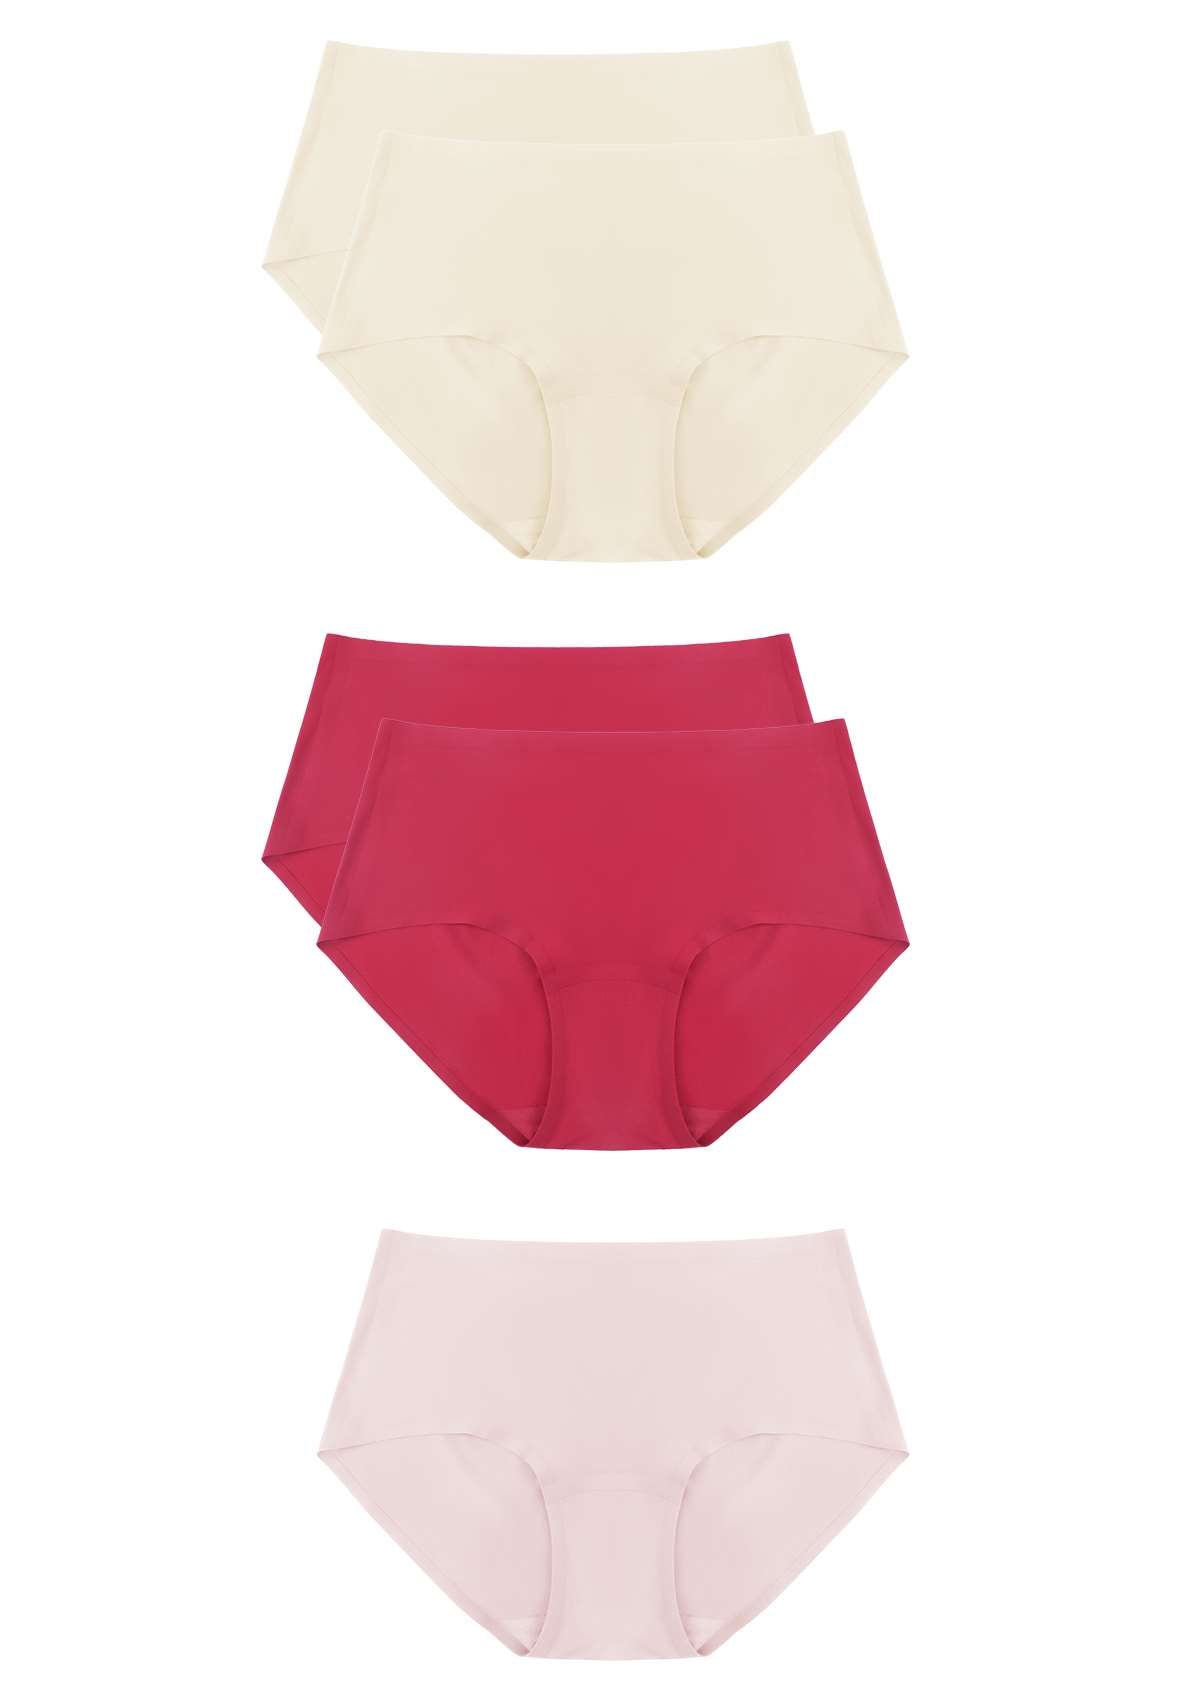 HSIA FlexiFit Soft Stretch Seamless Brief Underwear Bundle - 5 Packs/$20 / L-2XL / 2*Peach Beige+2*Red+Dusty Rose